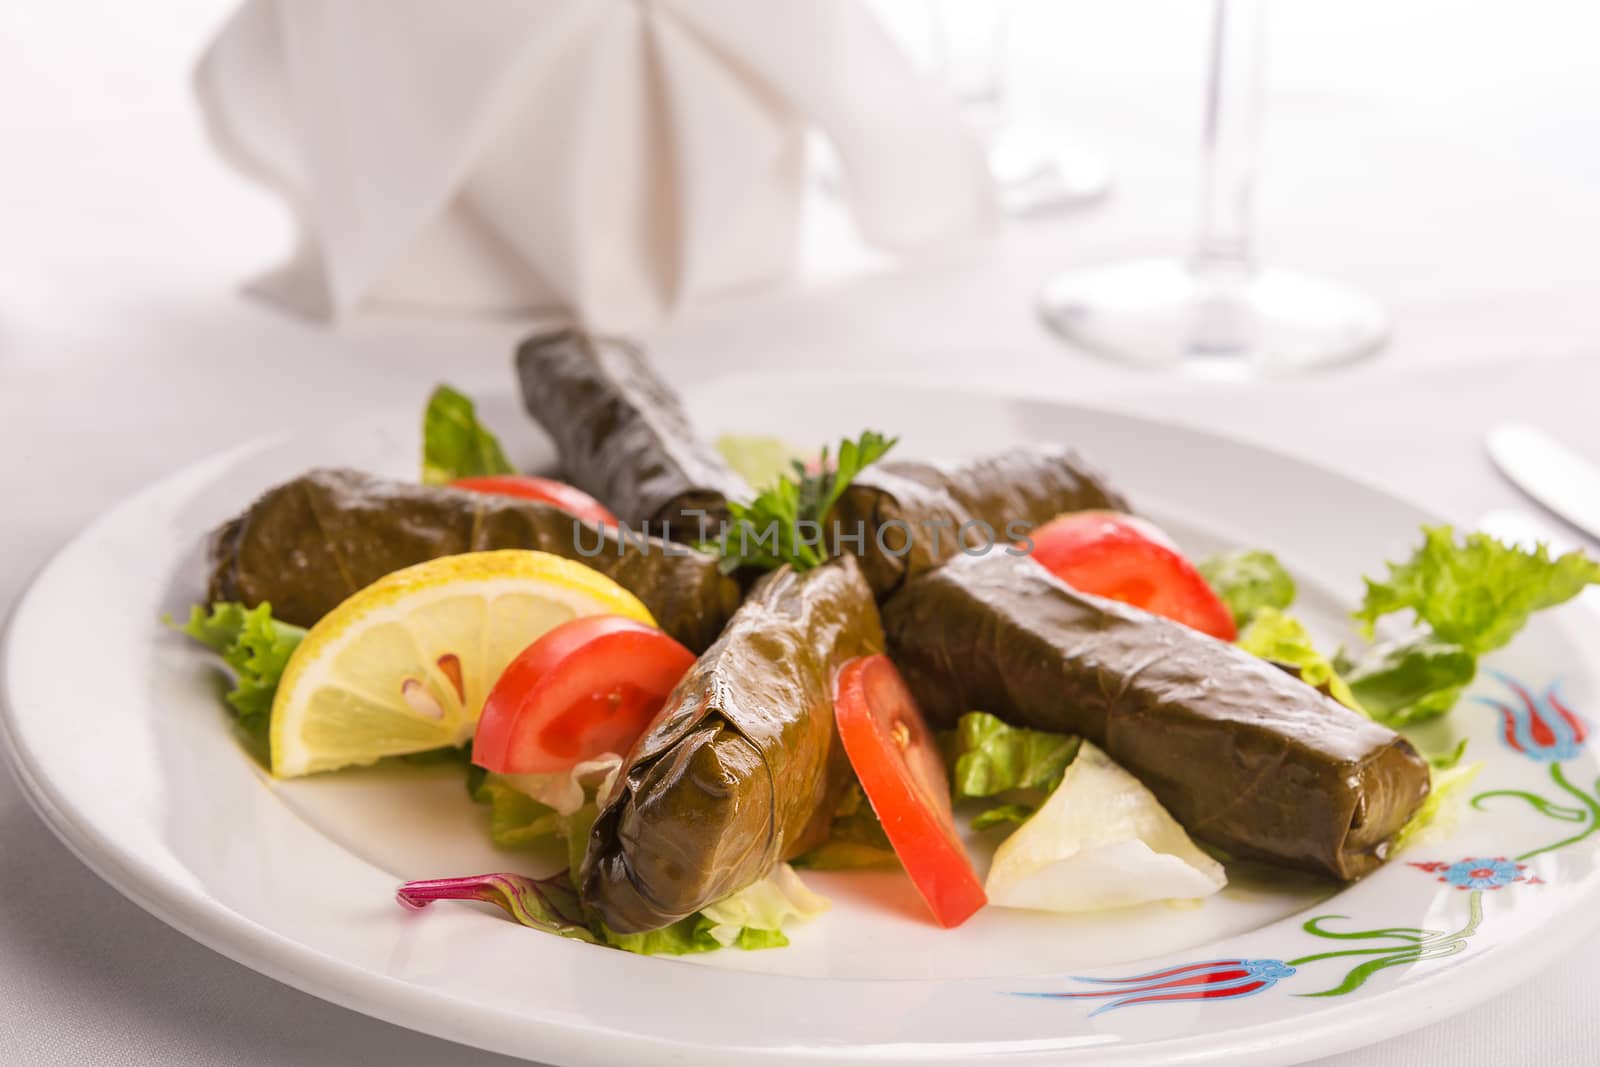 Turkish style dolmas arranged with slice of tomatoes, lemon and Lettuce